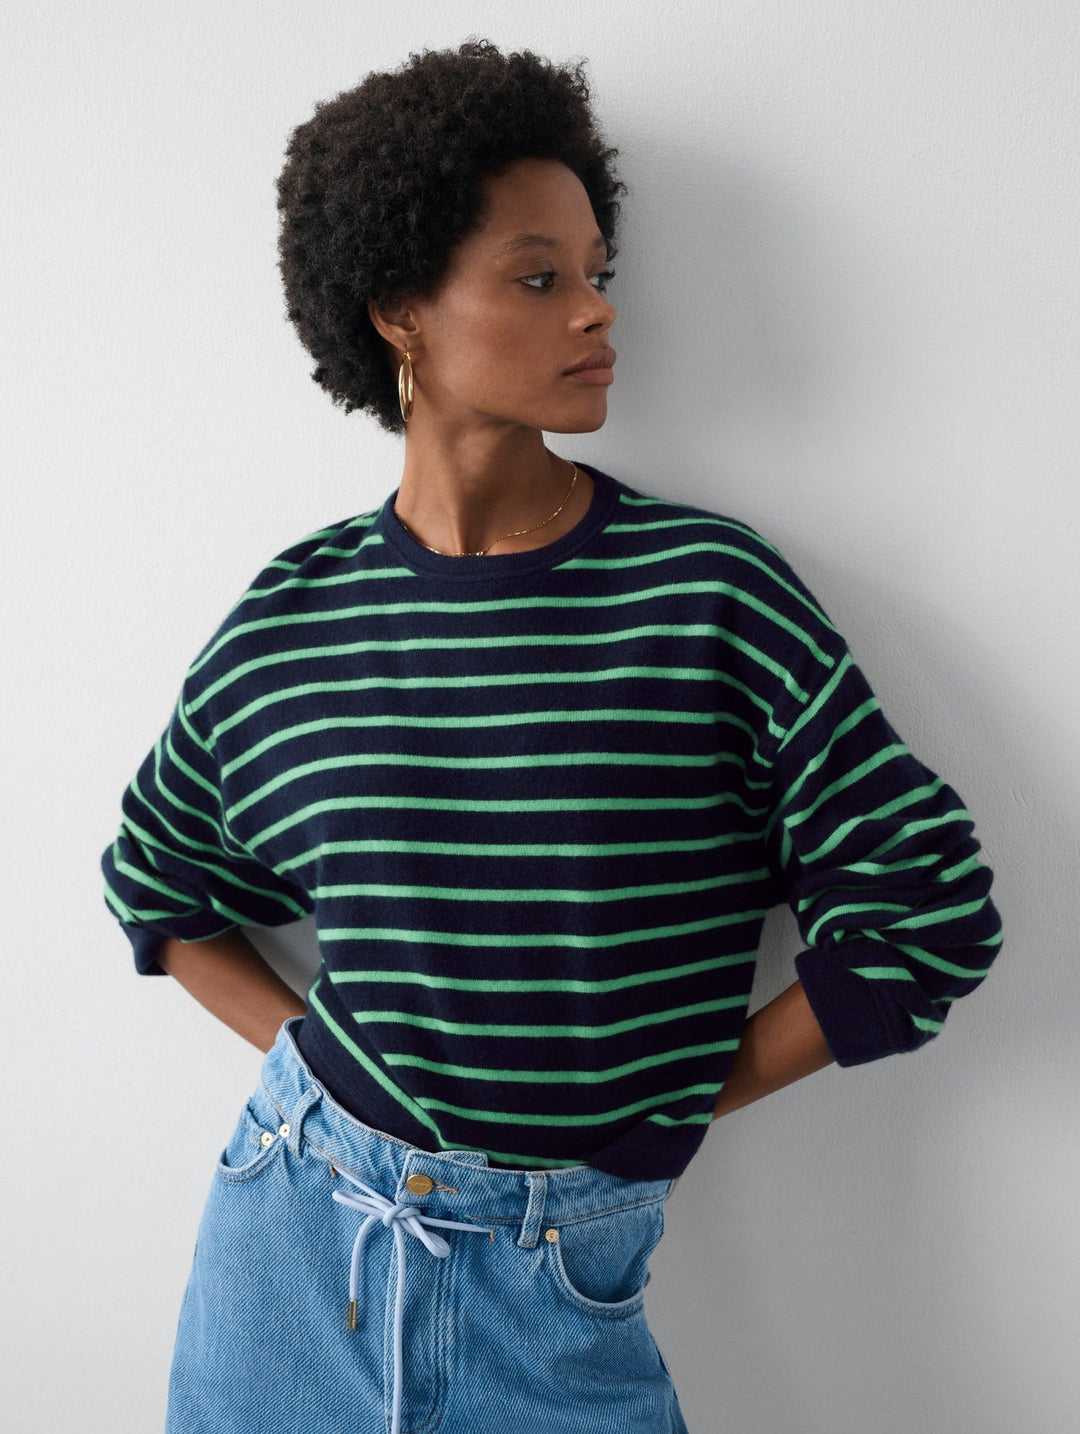 White & Warren - Cashmere Drop Shoulder Striped Sweater: Navy/Green - Shorely Chic Boutique